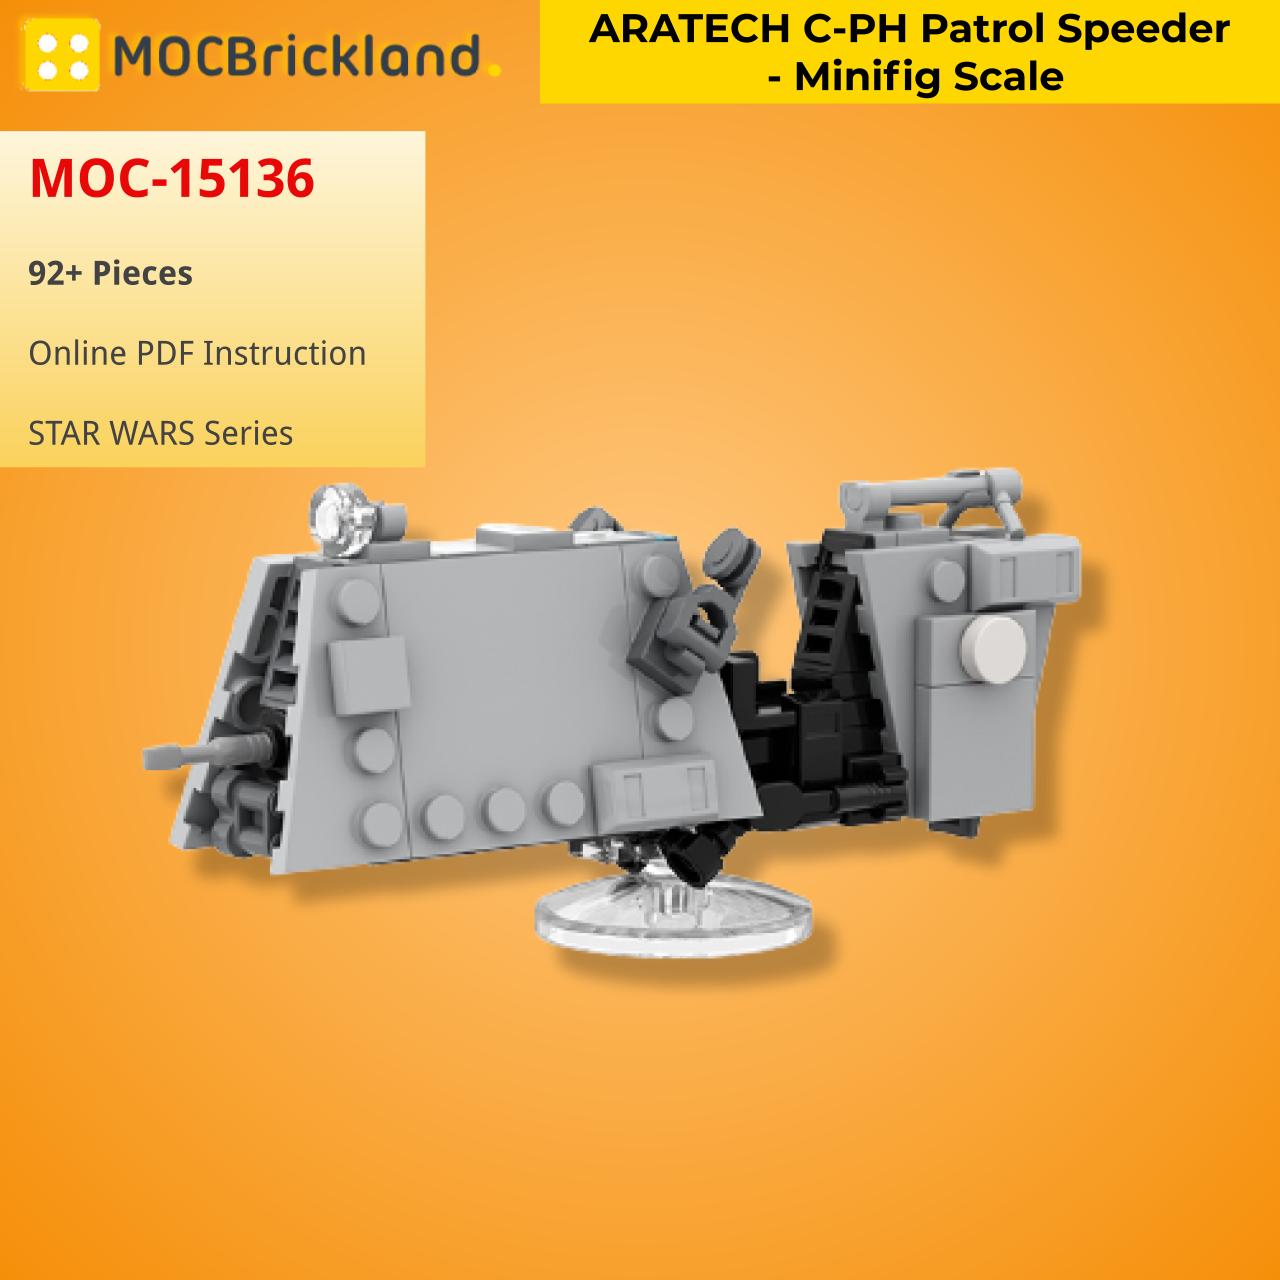 MOCBRICKLAND MOC-15136 ARATECH C-PH Patrol Speeder - Minifig Scale